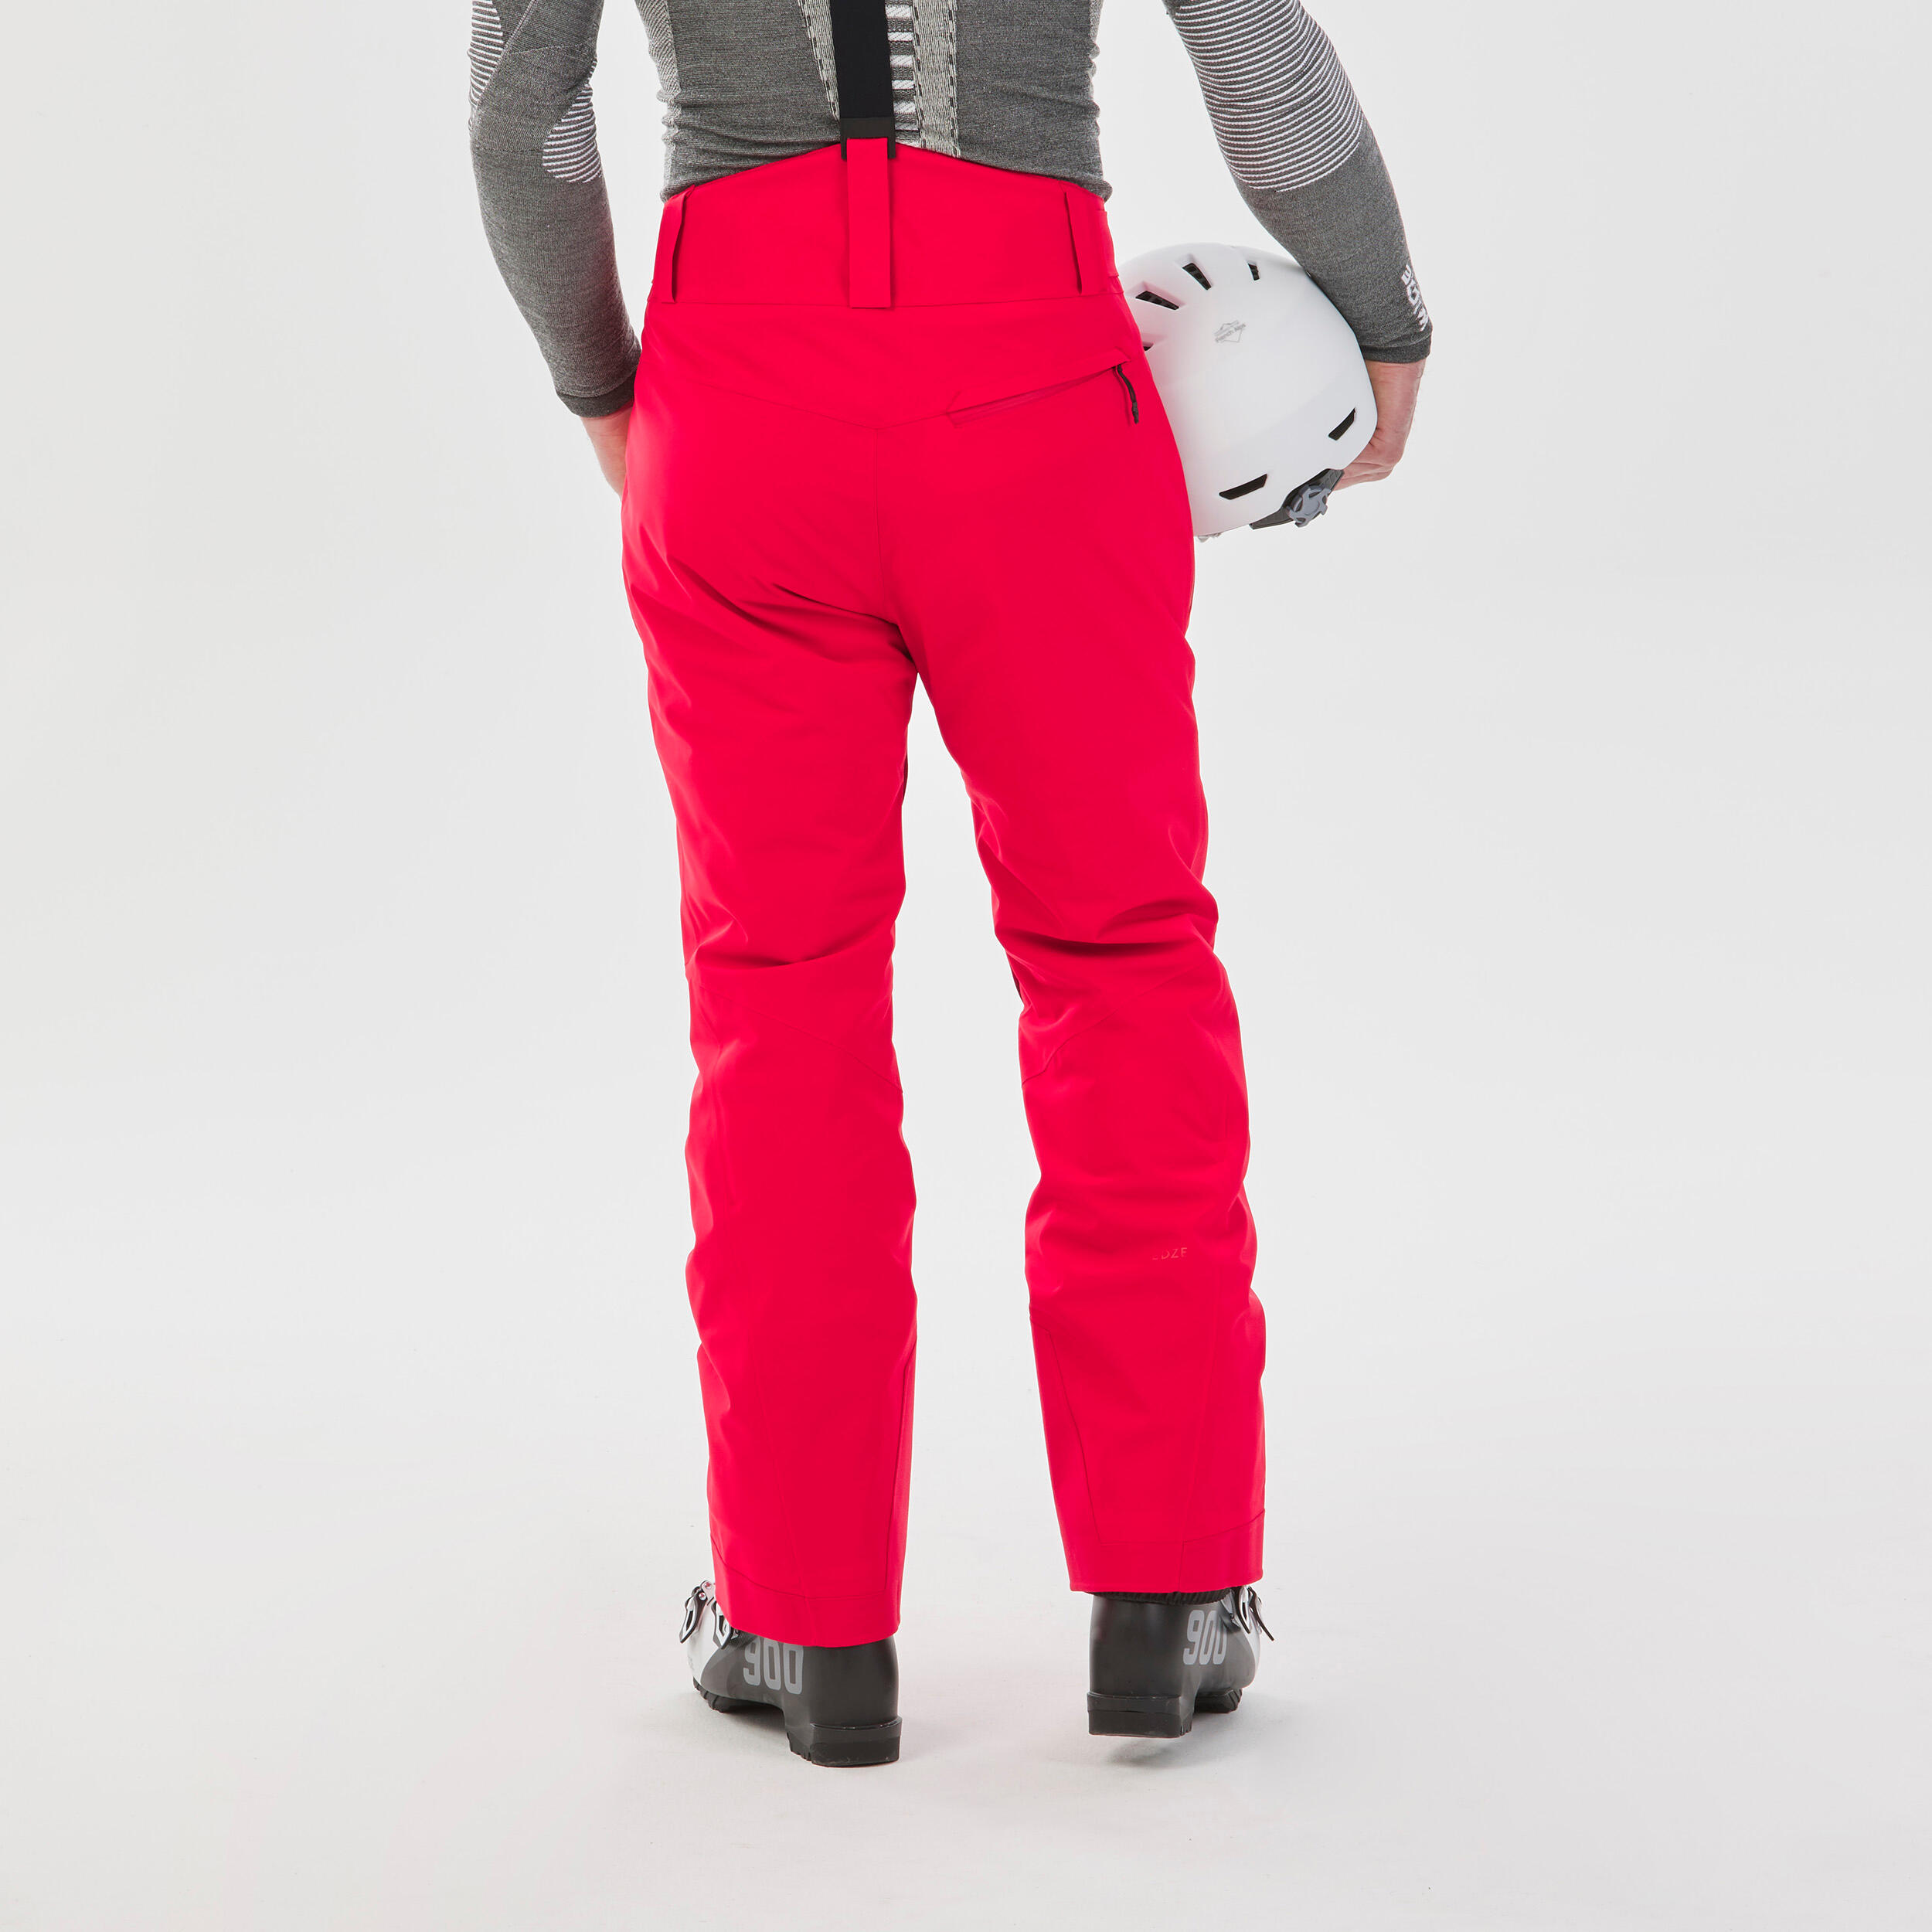 Men's Warm Ski Trousers - 580 - Red 5/11